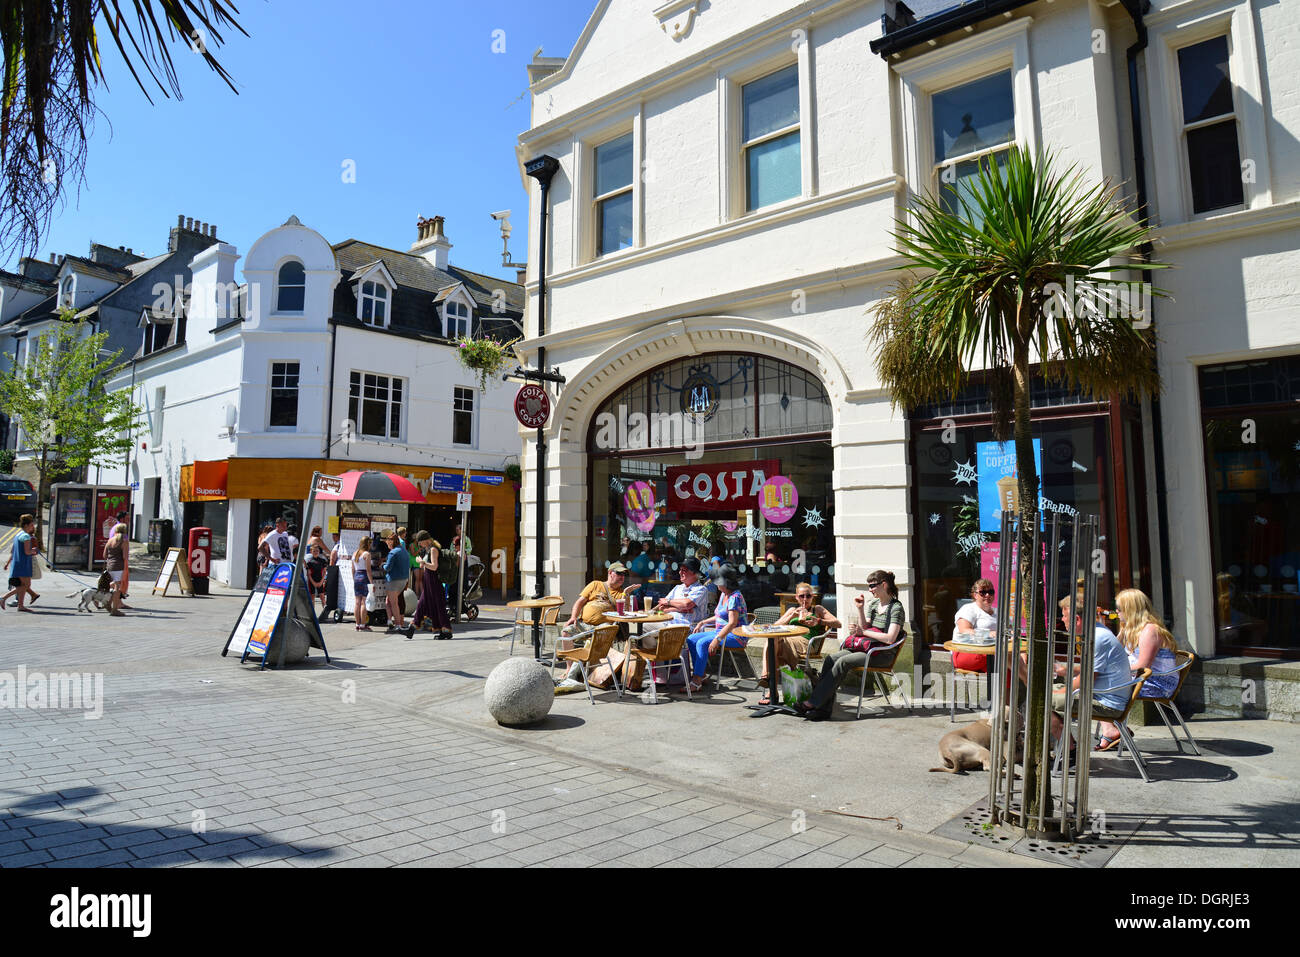 Costa coffee shop, Bank Street, Newquay, Cornwall, England, Regno Unito Foto Stock